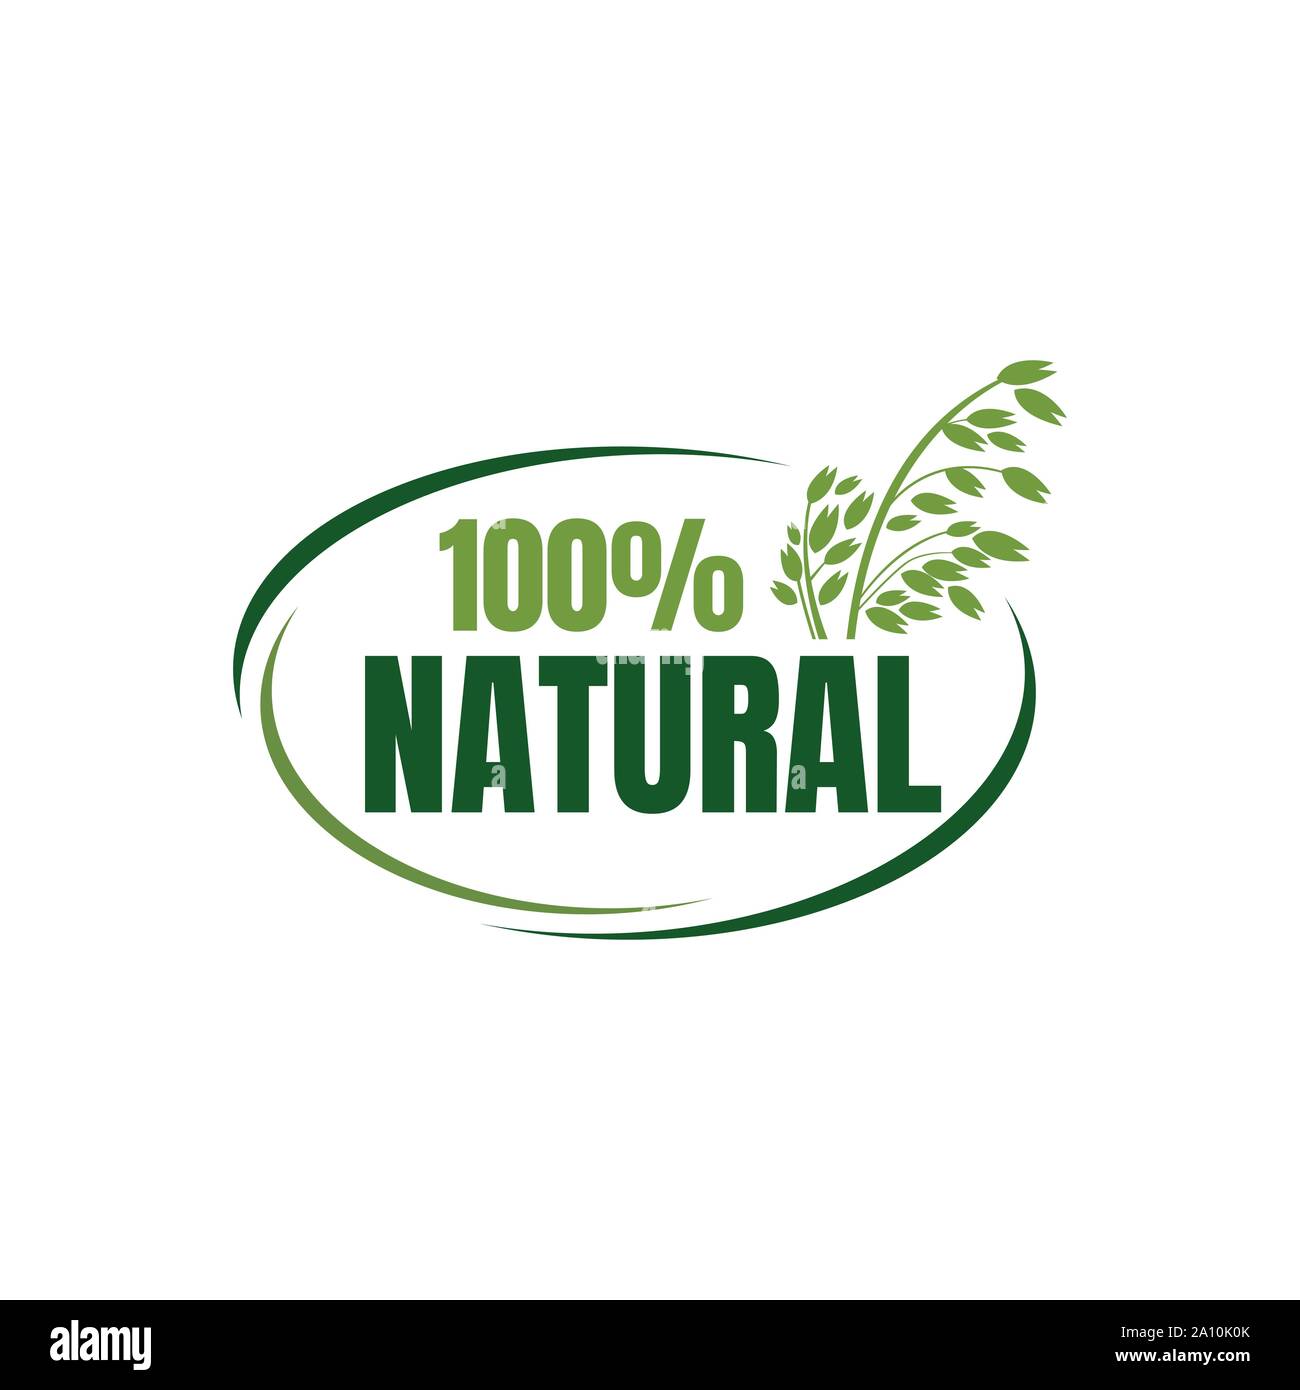 100% di alimenti naturali logo design vettoriali illustrazioni di intestazione Illustrazione Vettoriale